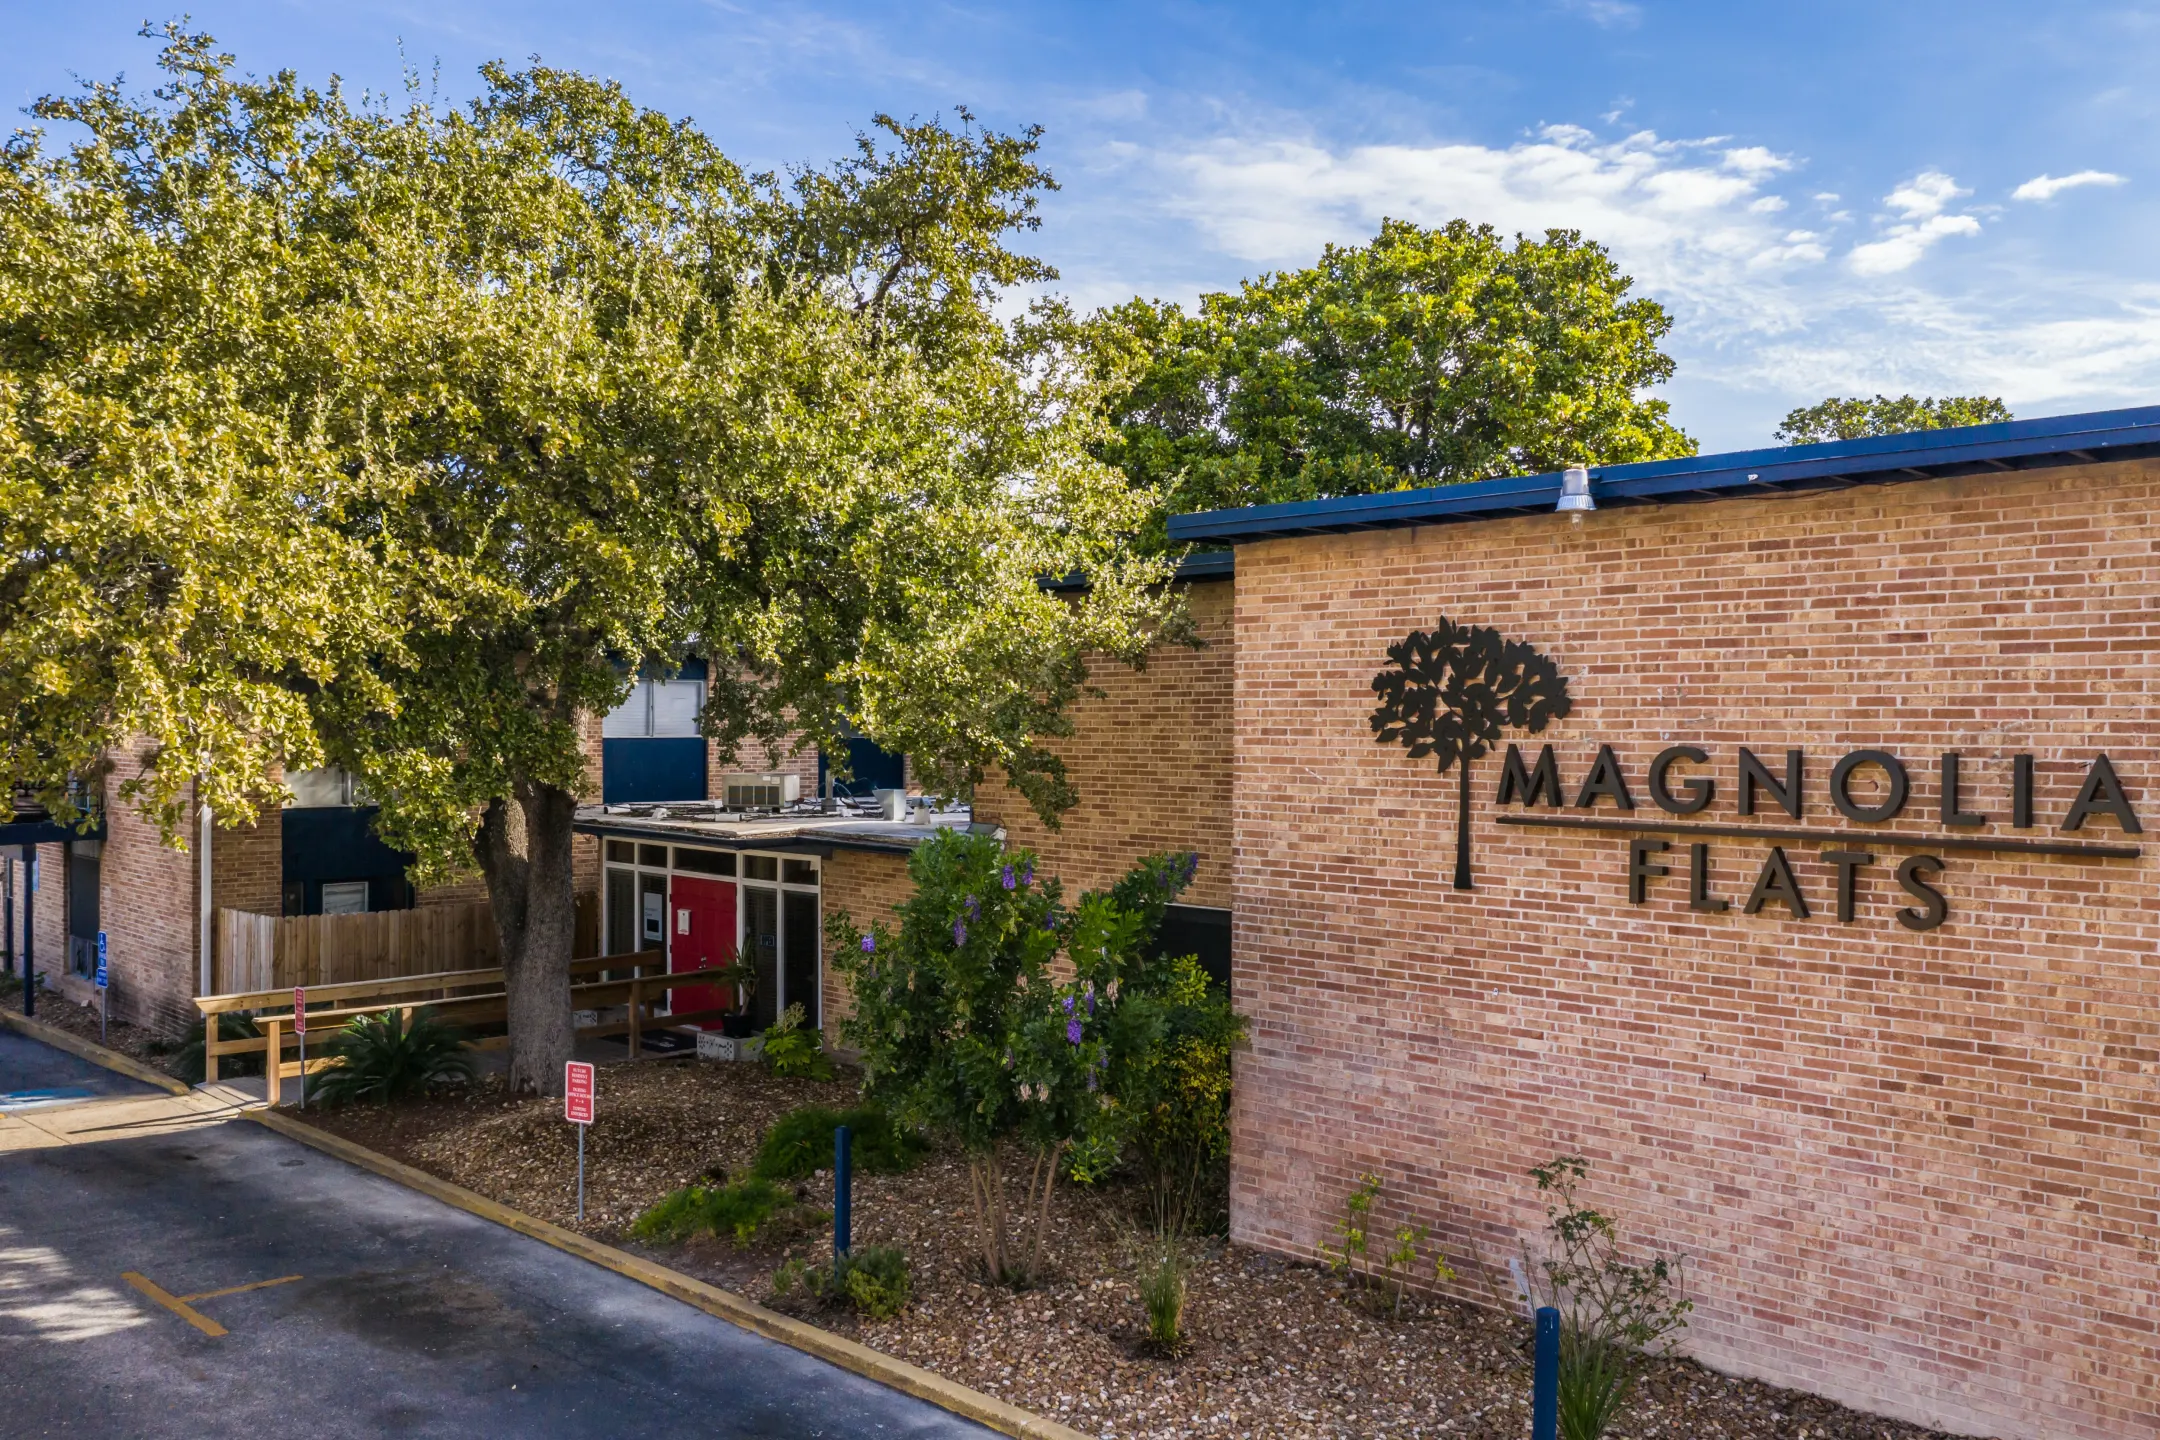 Magnolia Flats - San Antonio, TX